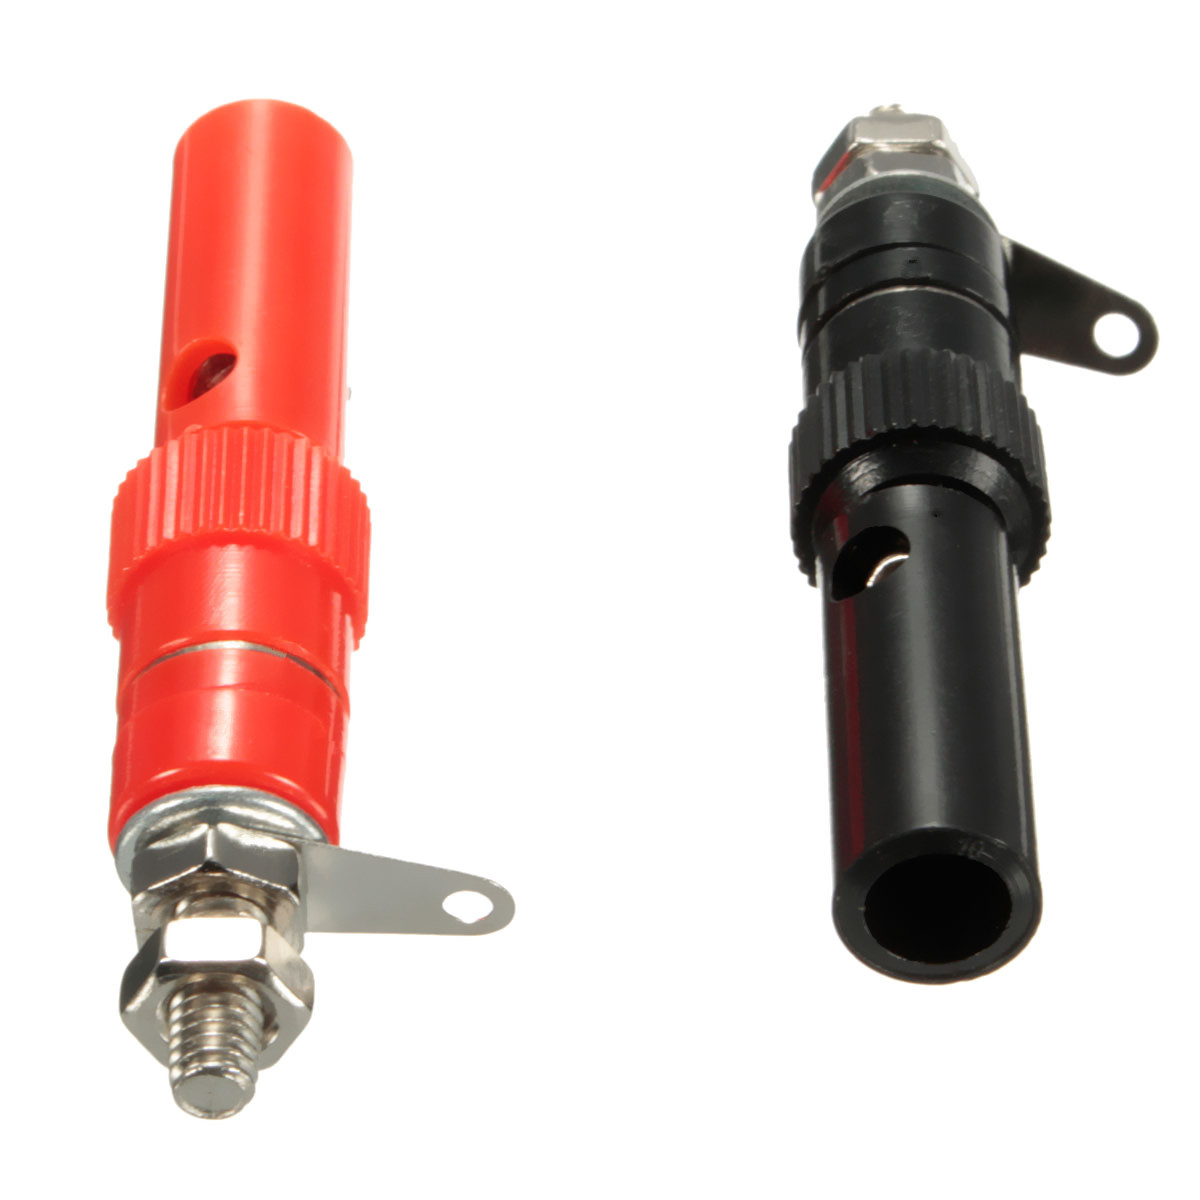 DANIU-30-Pairs-4mm-Terminal-Banana-Plug-Socket-Jack-Connectors-Instrument-Light-Tools-Black-and-Red-1358117-7